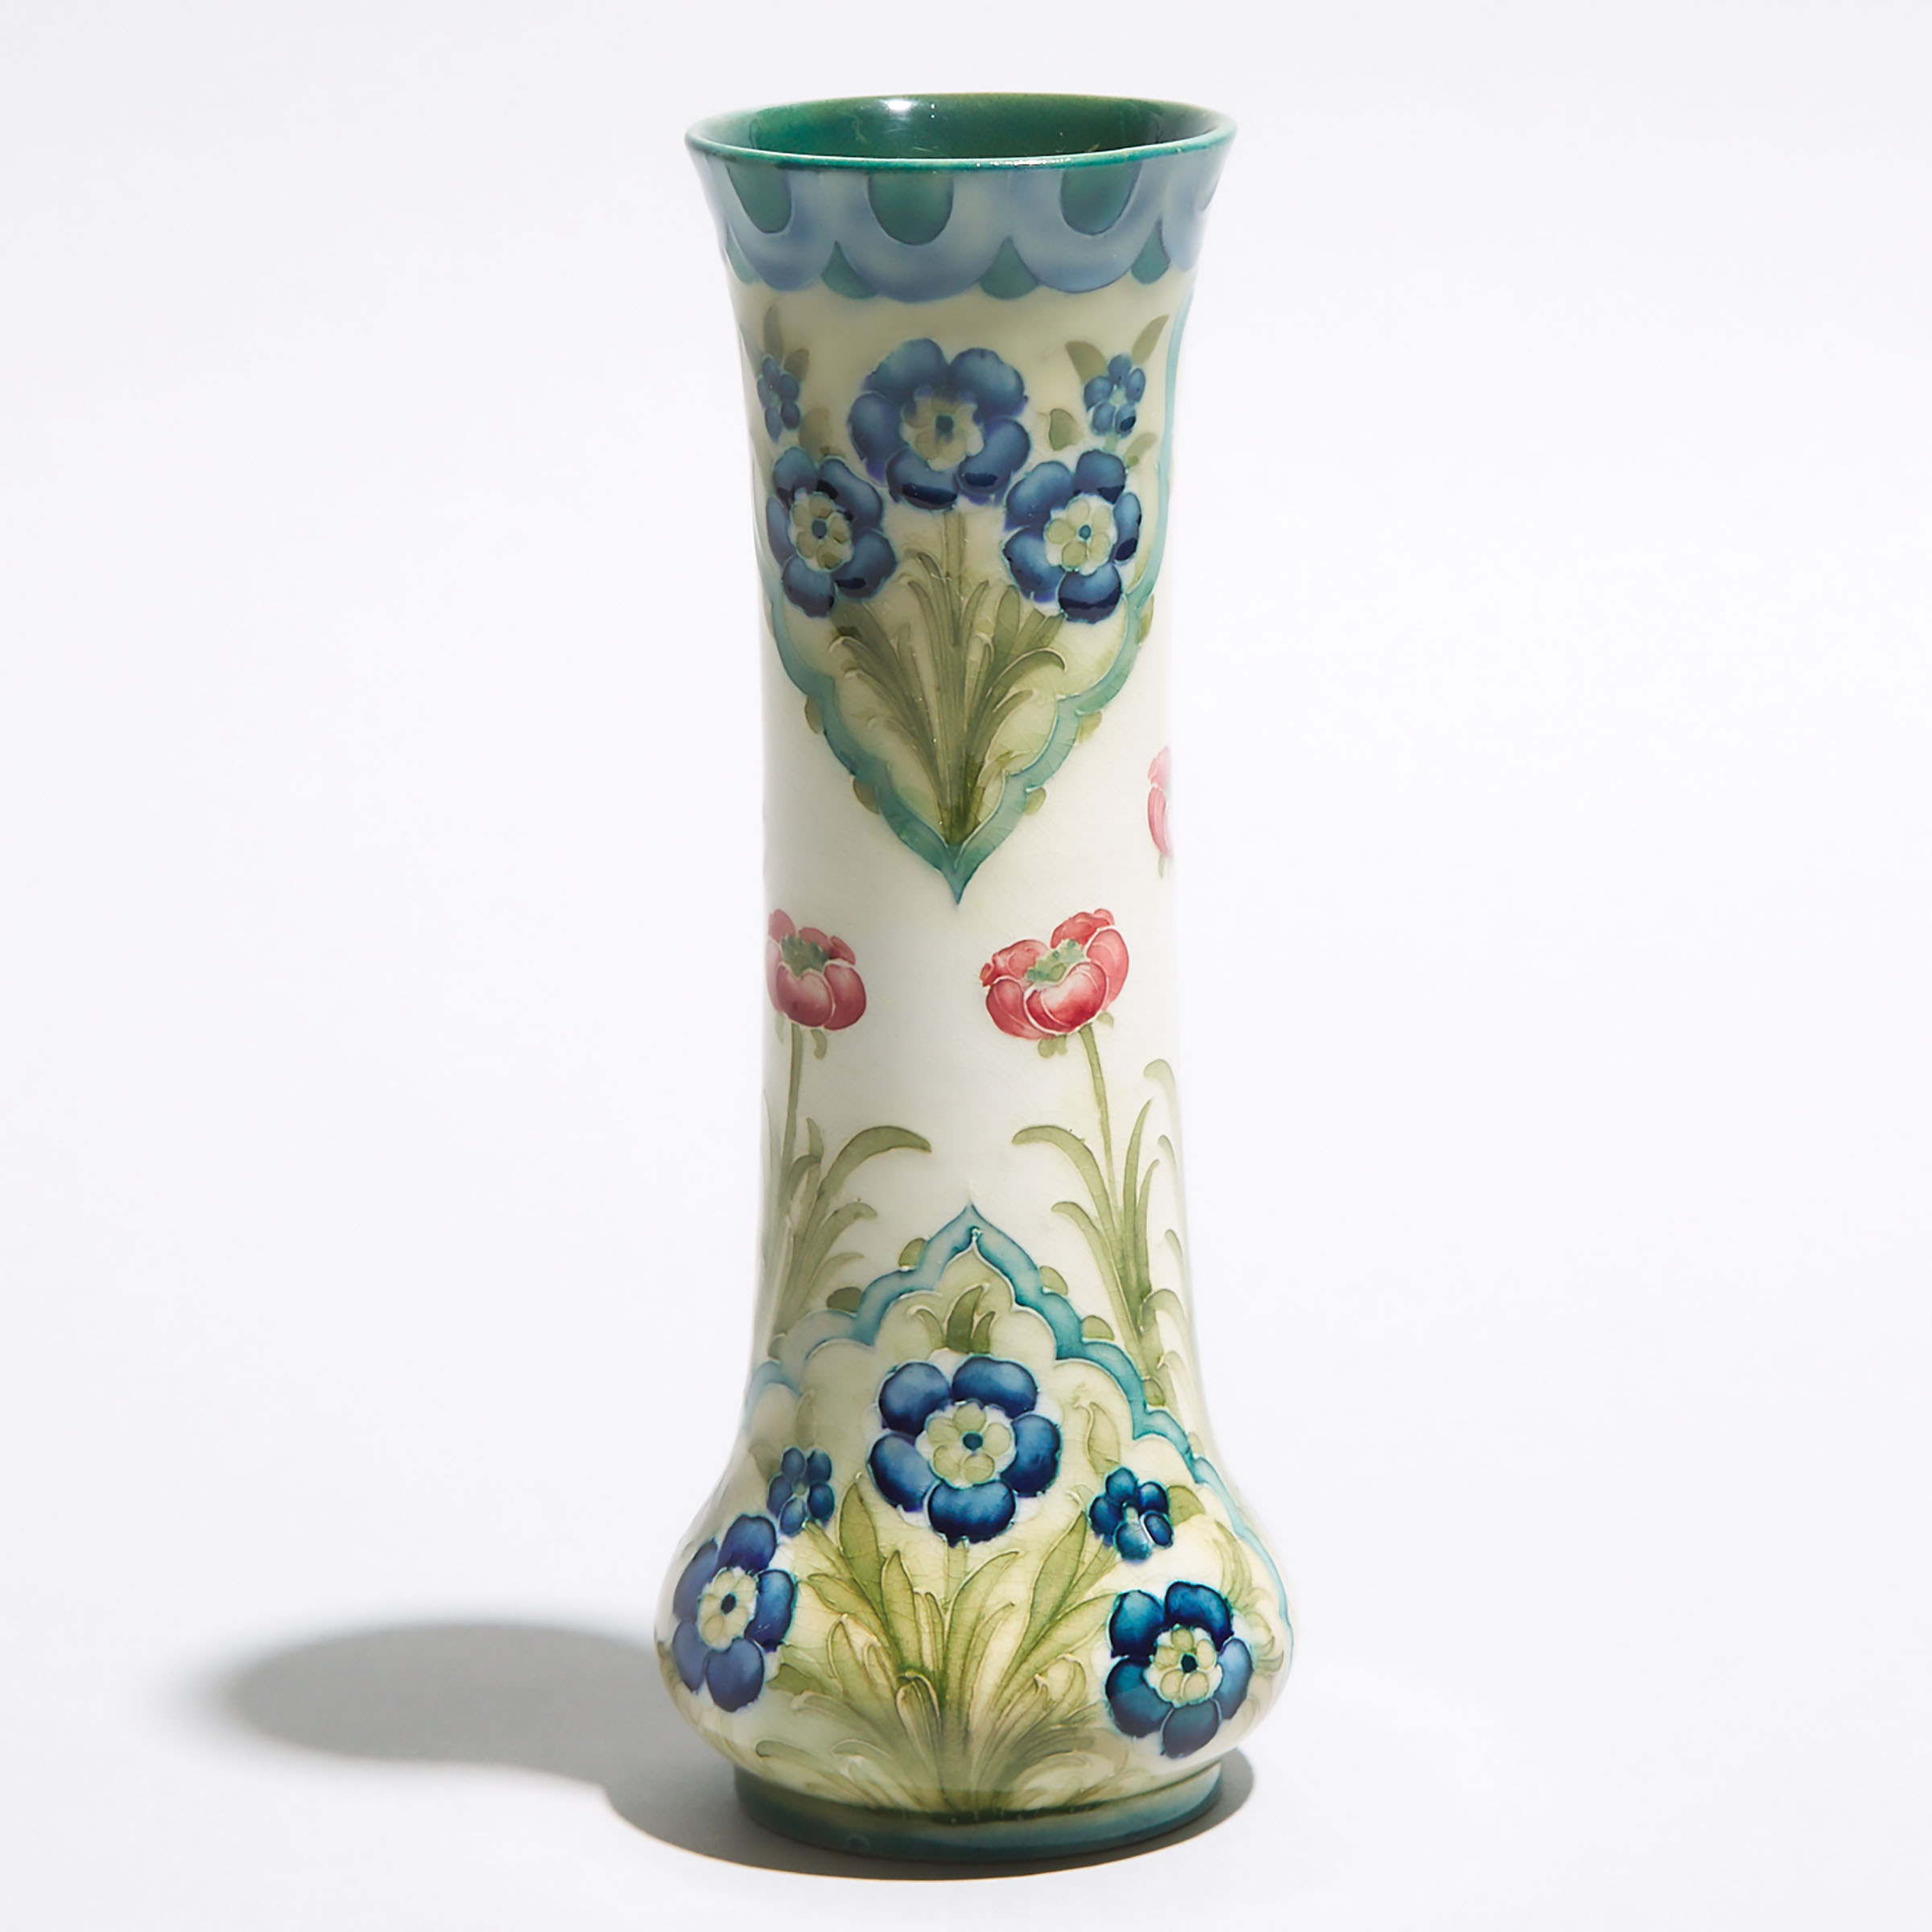 Macintyre Moorcroft Florian Vase, for W.W. Furse of Ilfracombe, c.1908-09